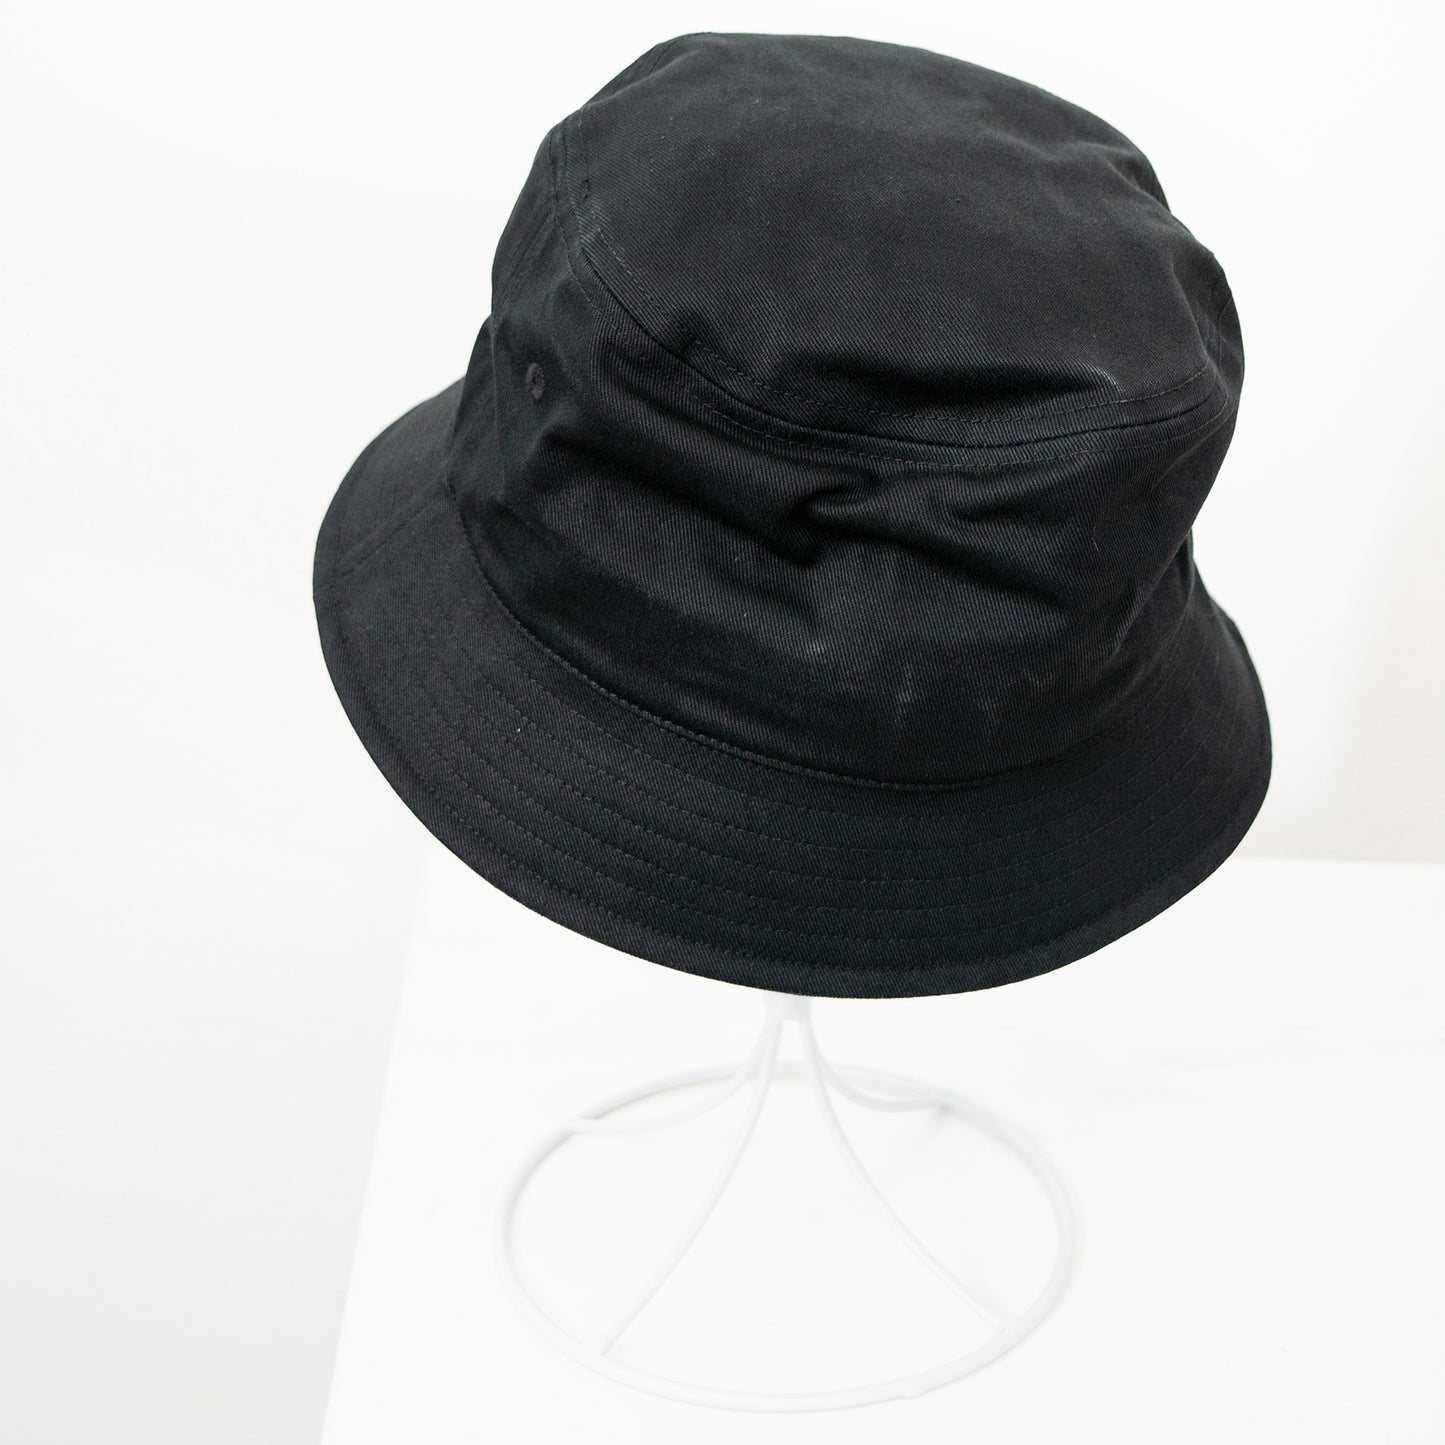 Casper Casper Embroidery Bucket Hat Black - YOUAREMYPOISON